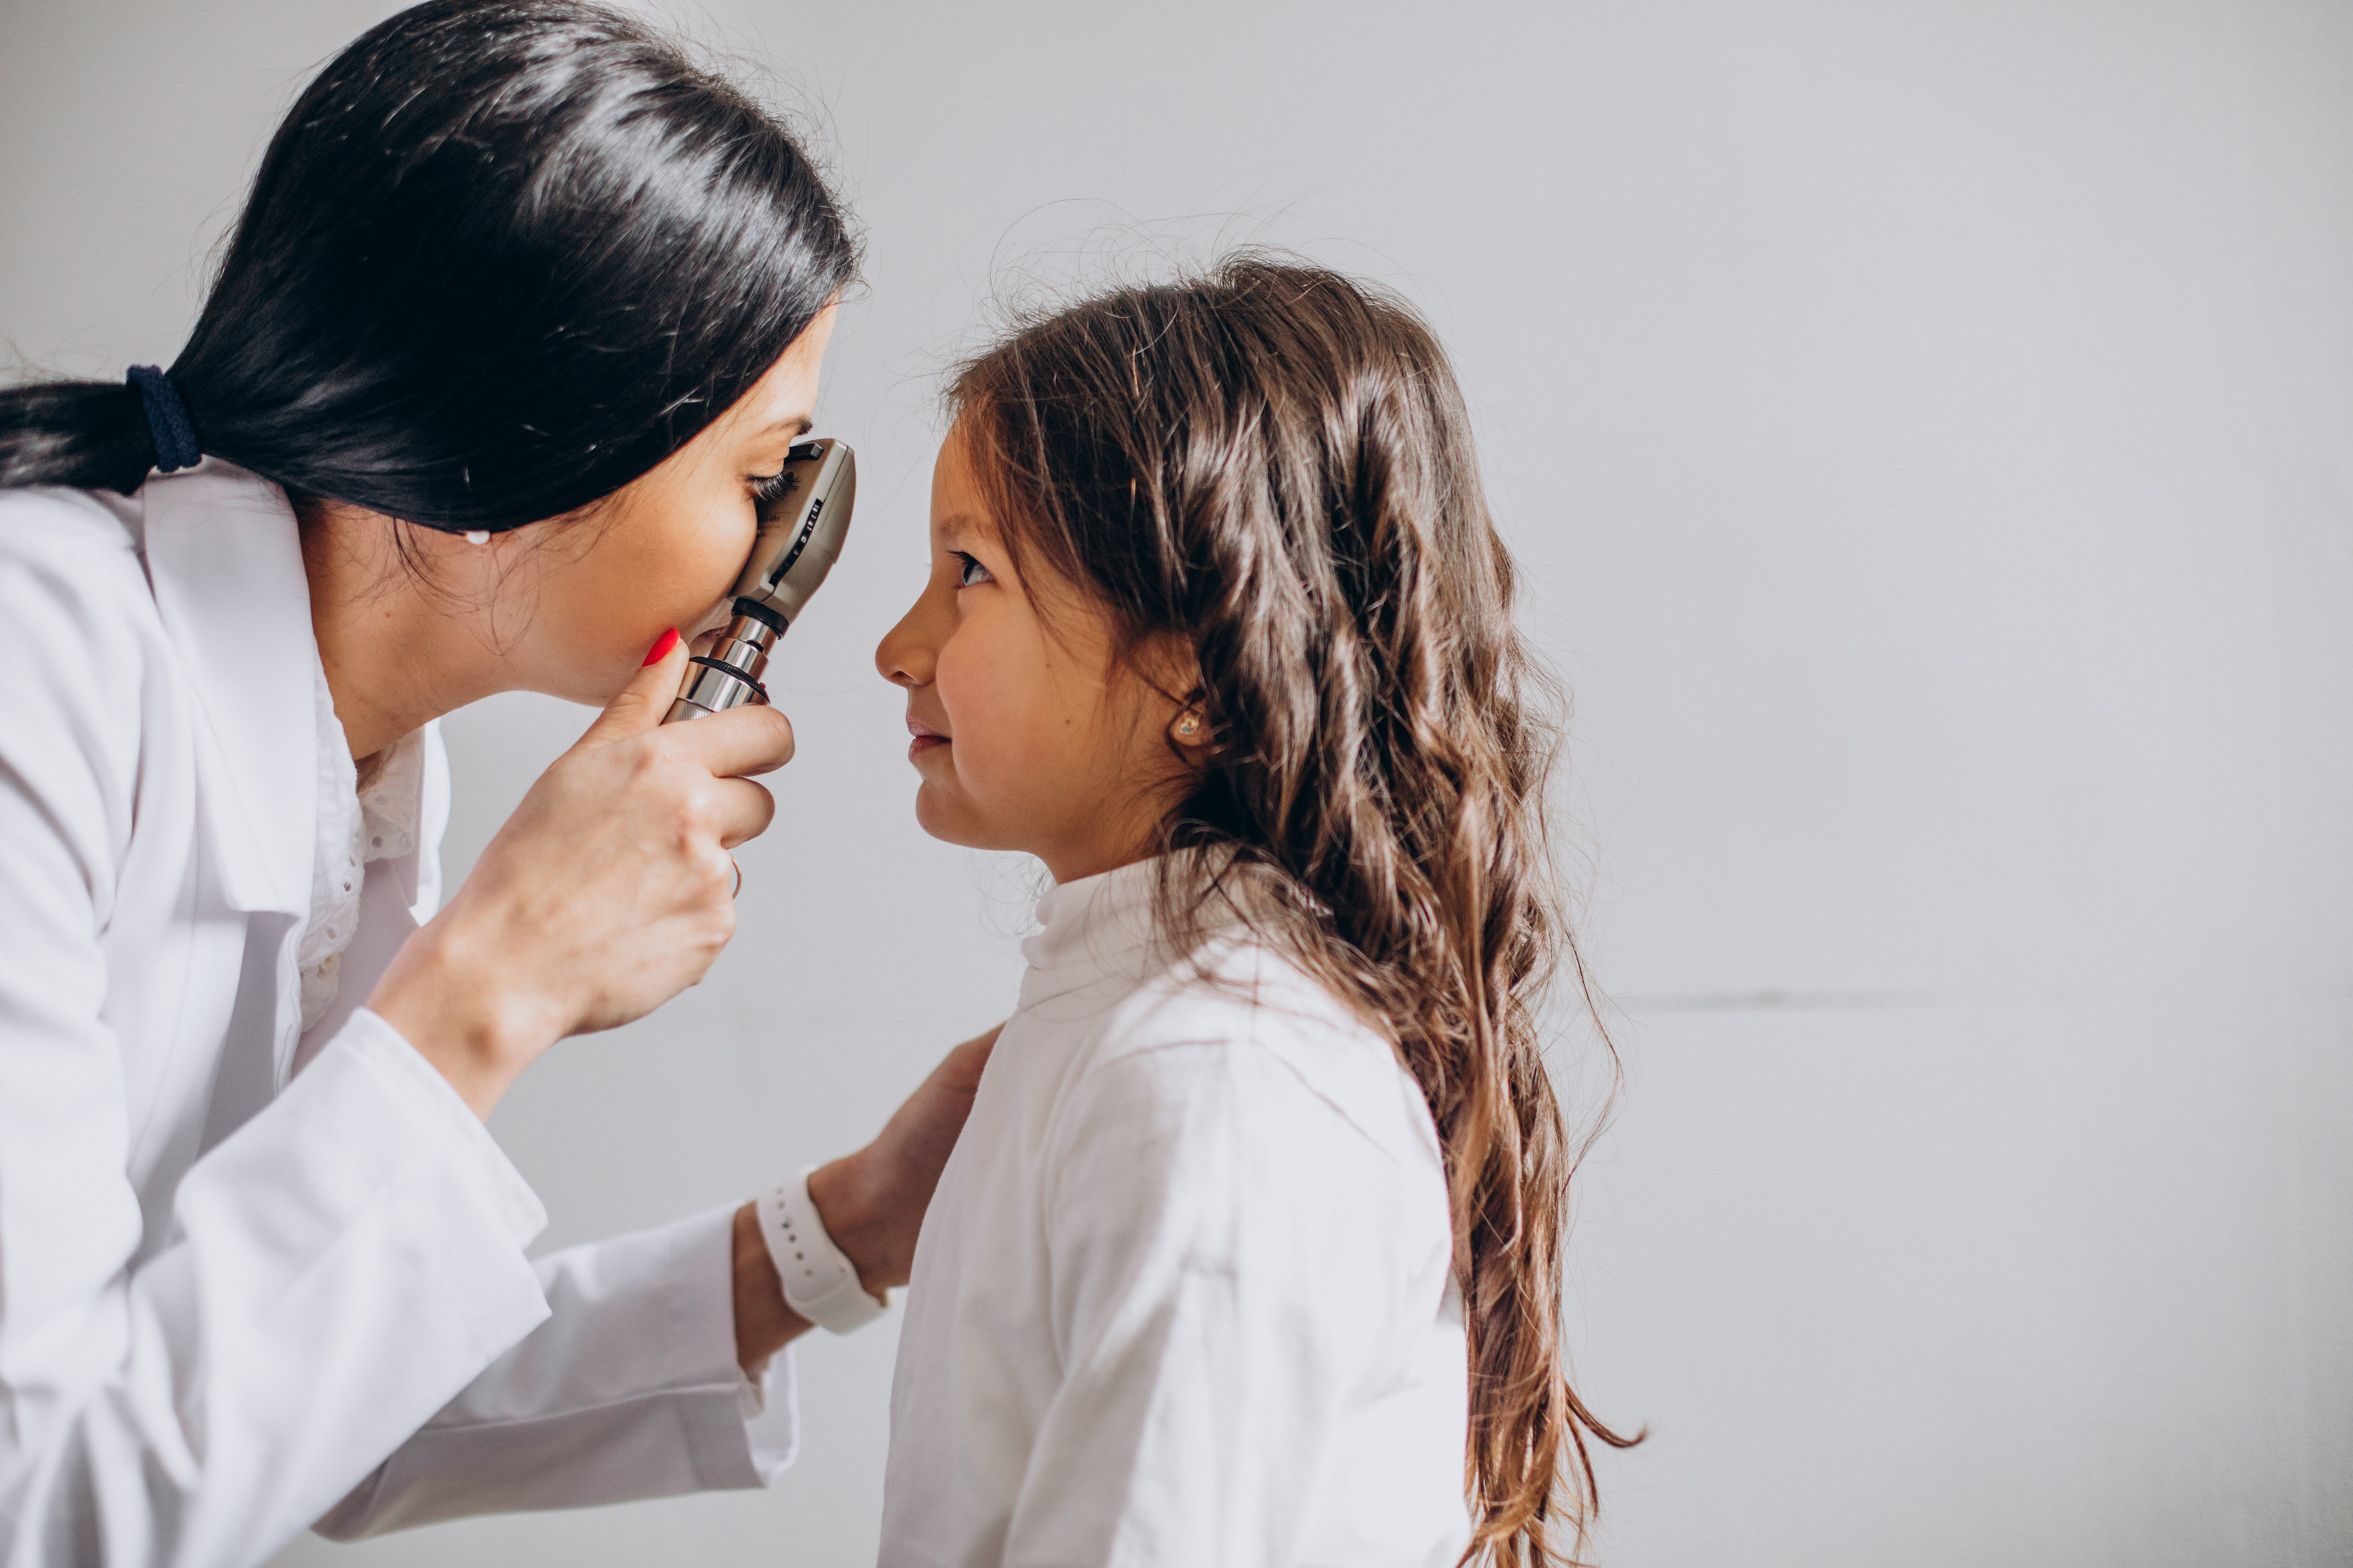 Cele mai frecvente patologii oculare la copii - eOpticon